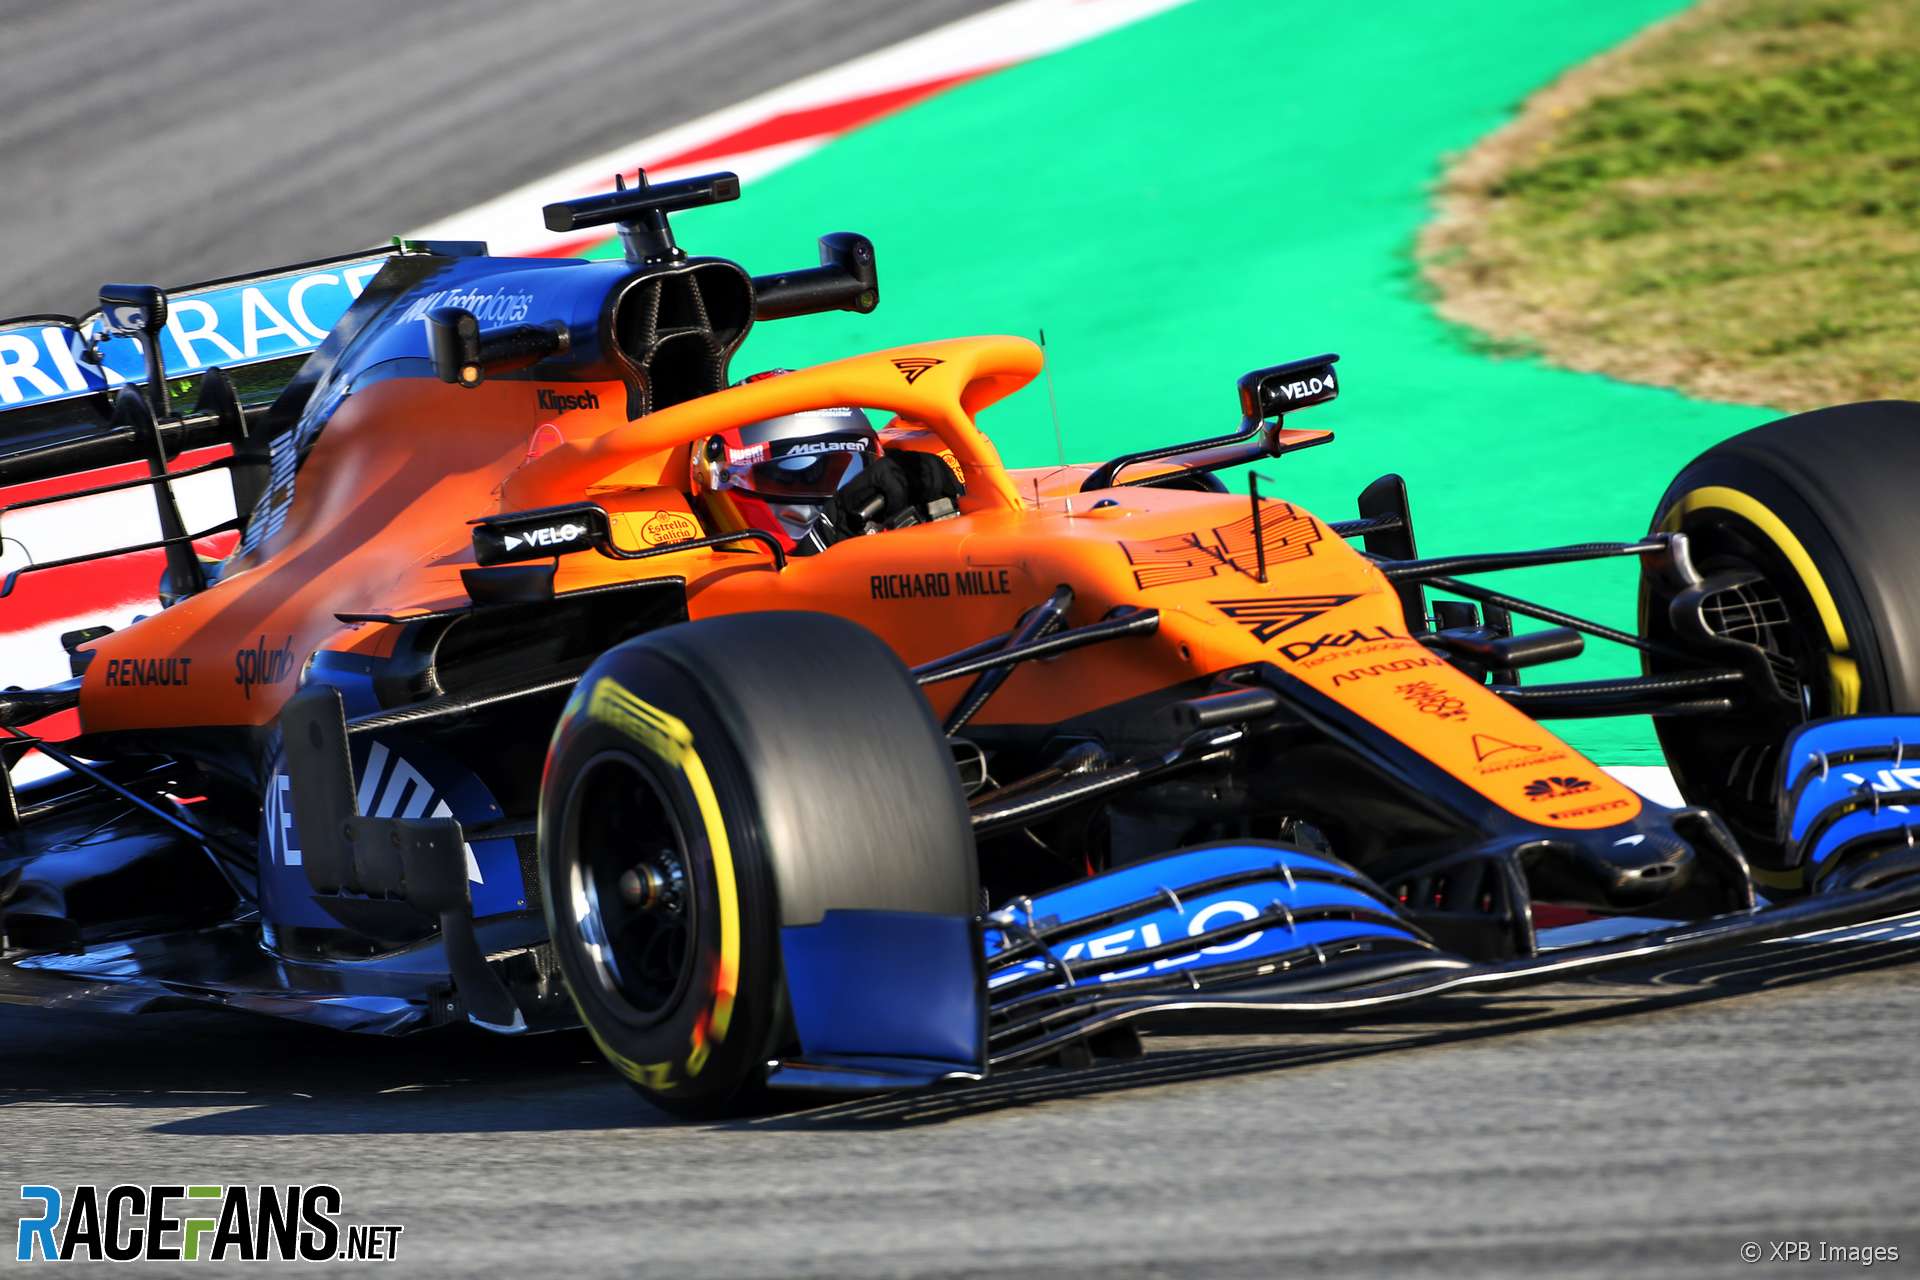 Carlos Sainz Jnr, McLaren, Circuit de Catalunya